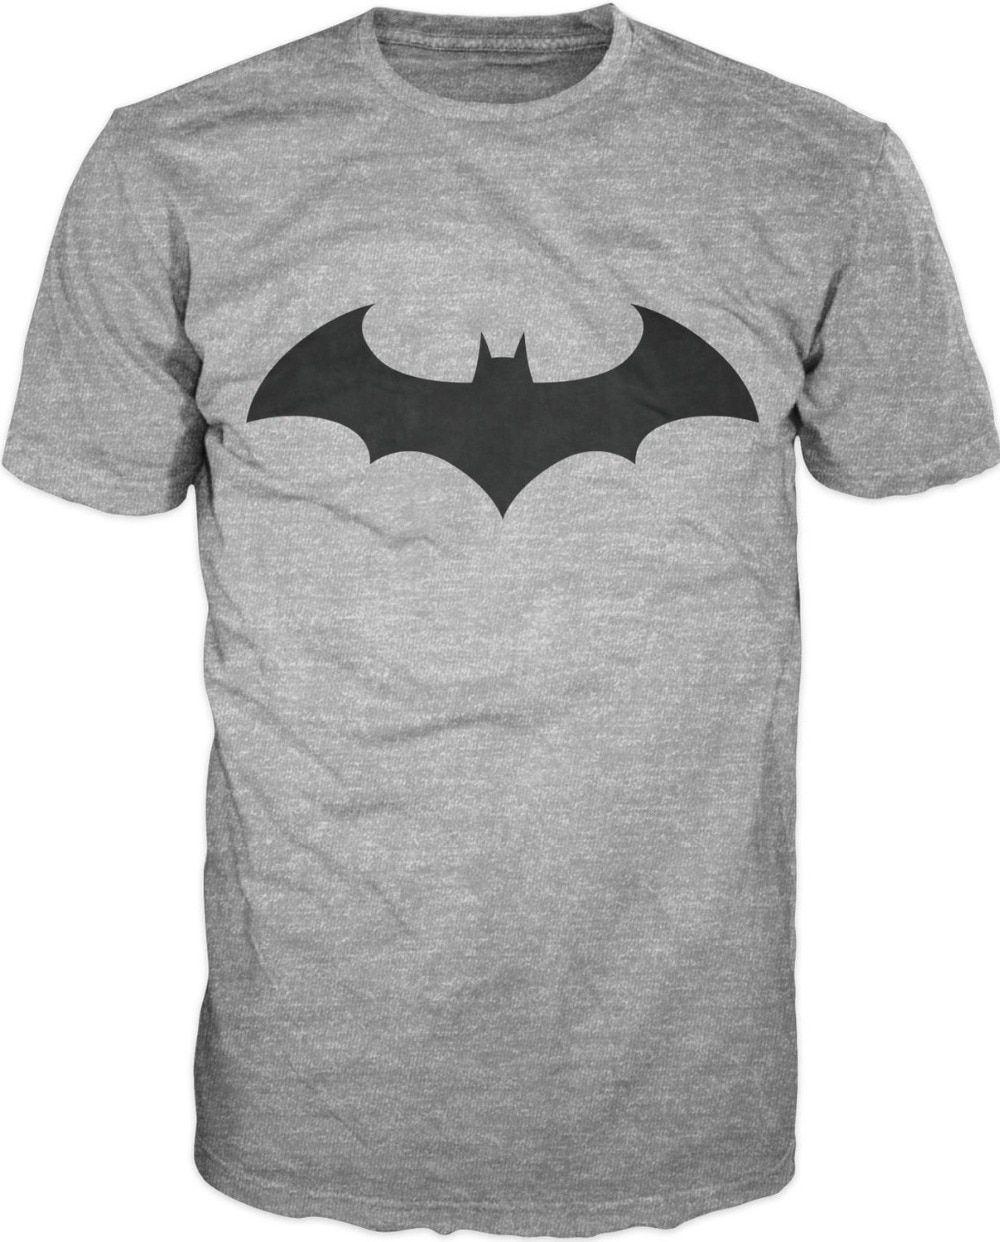 New Bat Logo - US $15.98 |Batman Dark Knight Logo Bat Fly Mens T Shirt Brand New Fashion  Summer Style 100% Cotton T Shirt Top Tee S XXXL-in T-Shirts from Men's ...